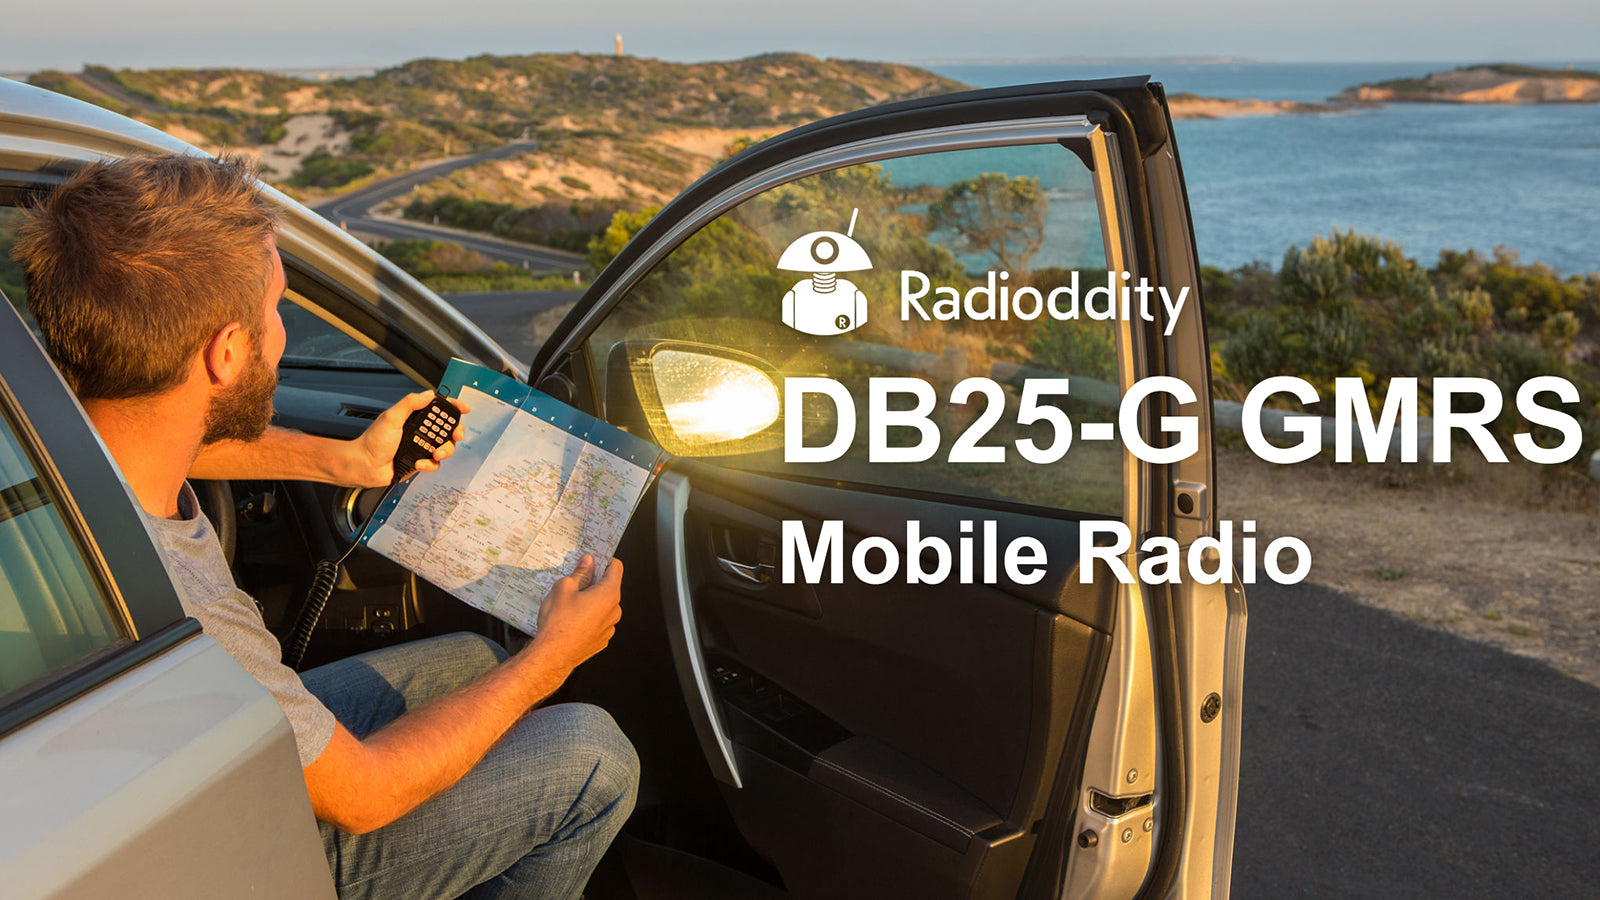 Radioddity DB25-G GMRS Mobile Radio 25W Quad Watch UHF VHF Scann